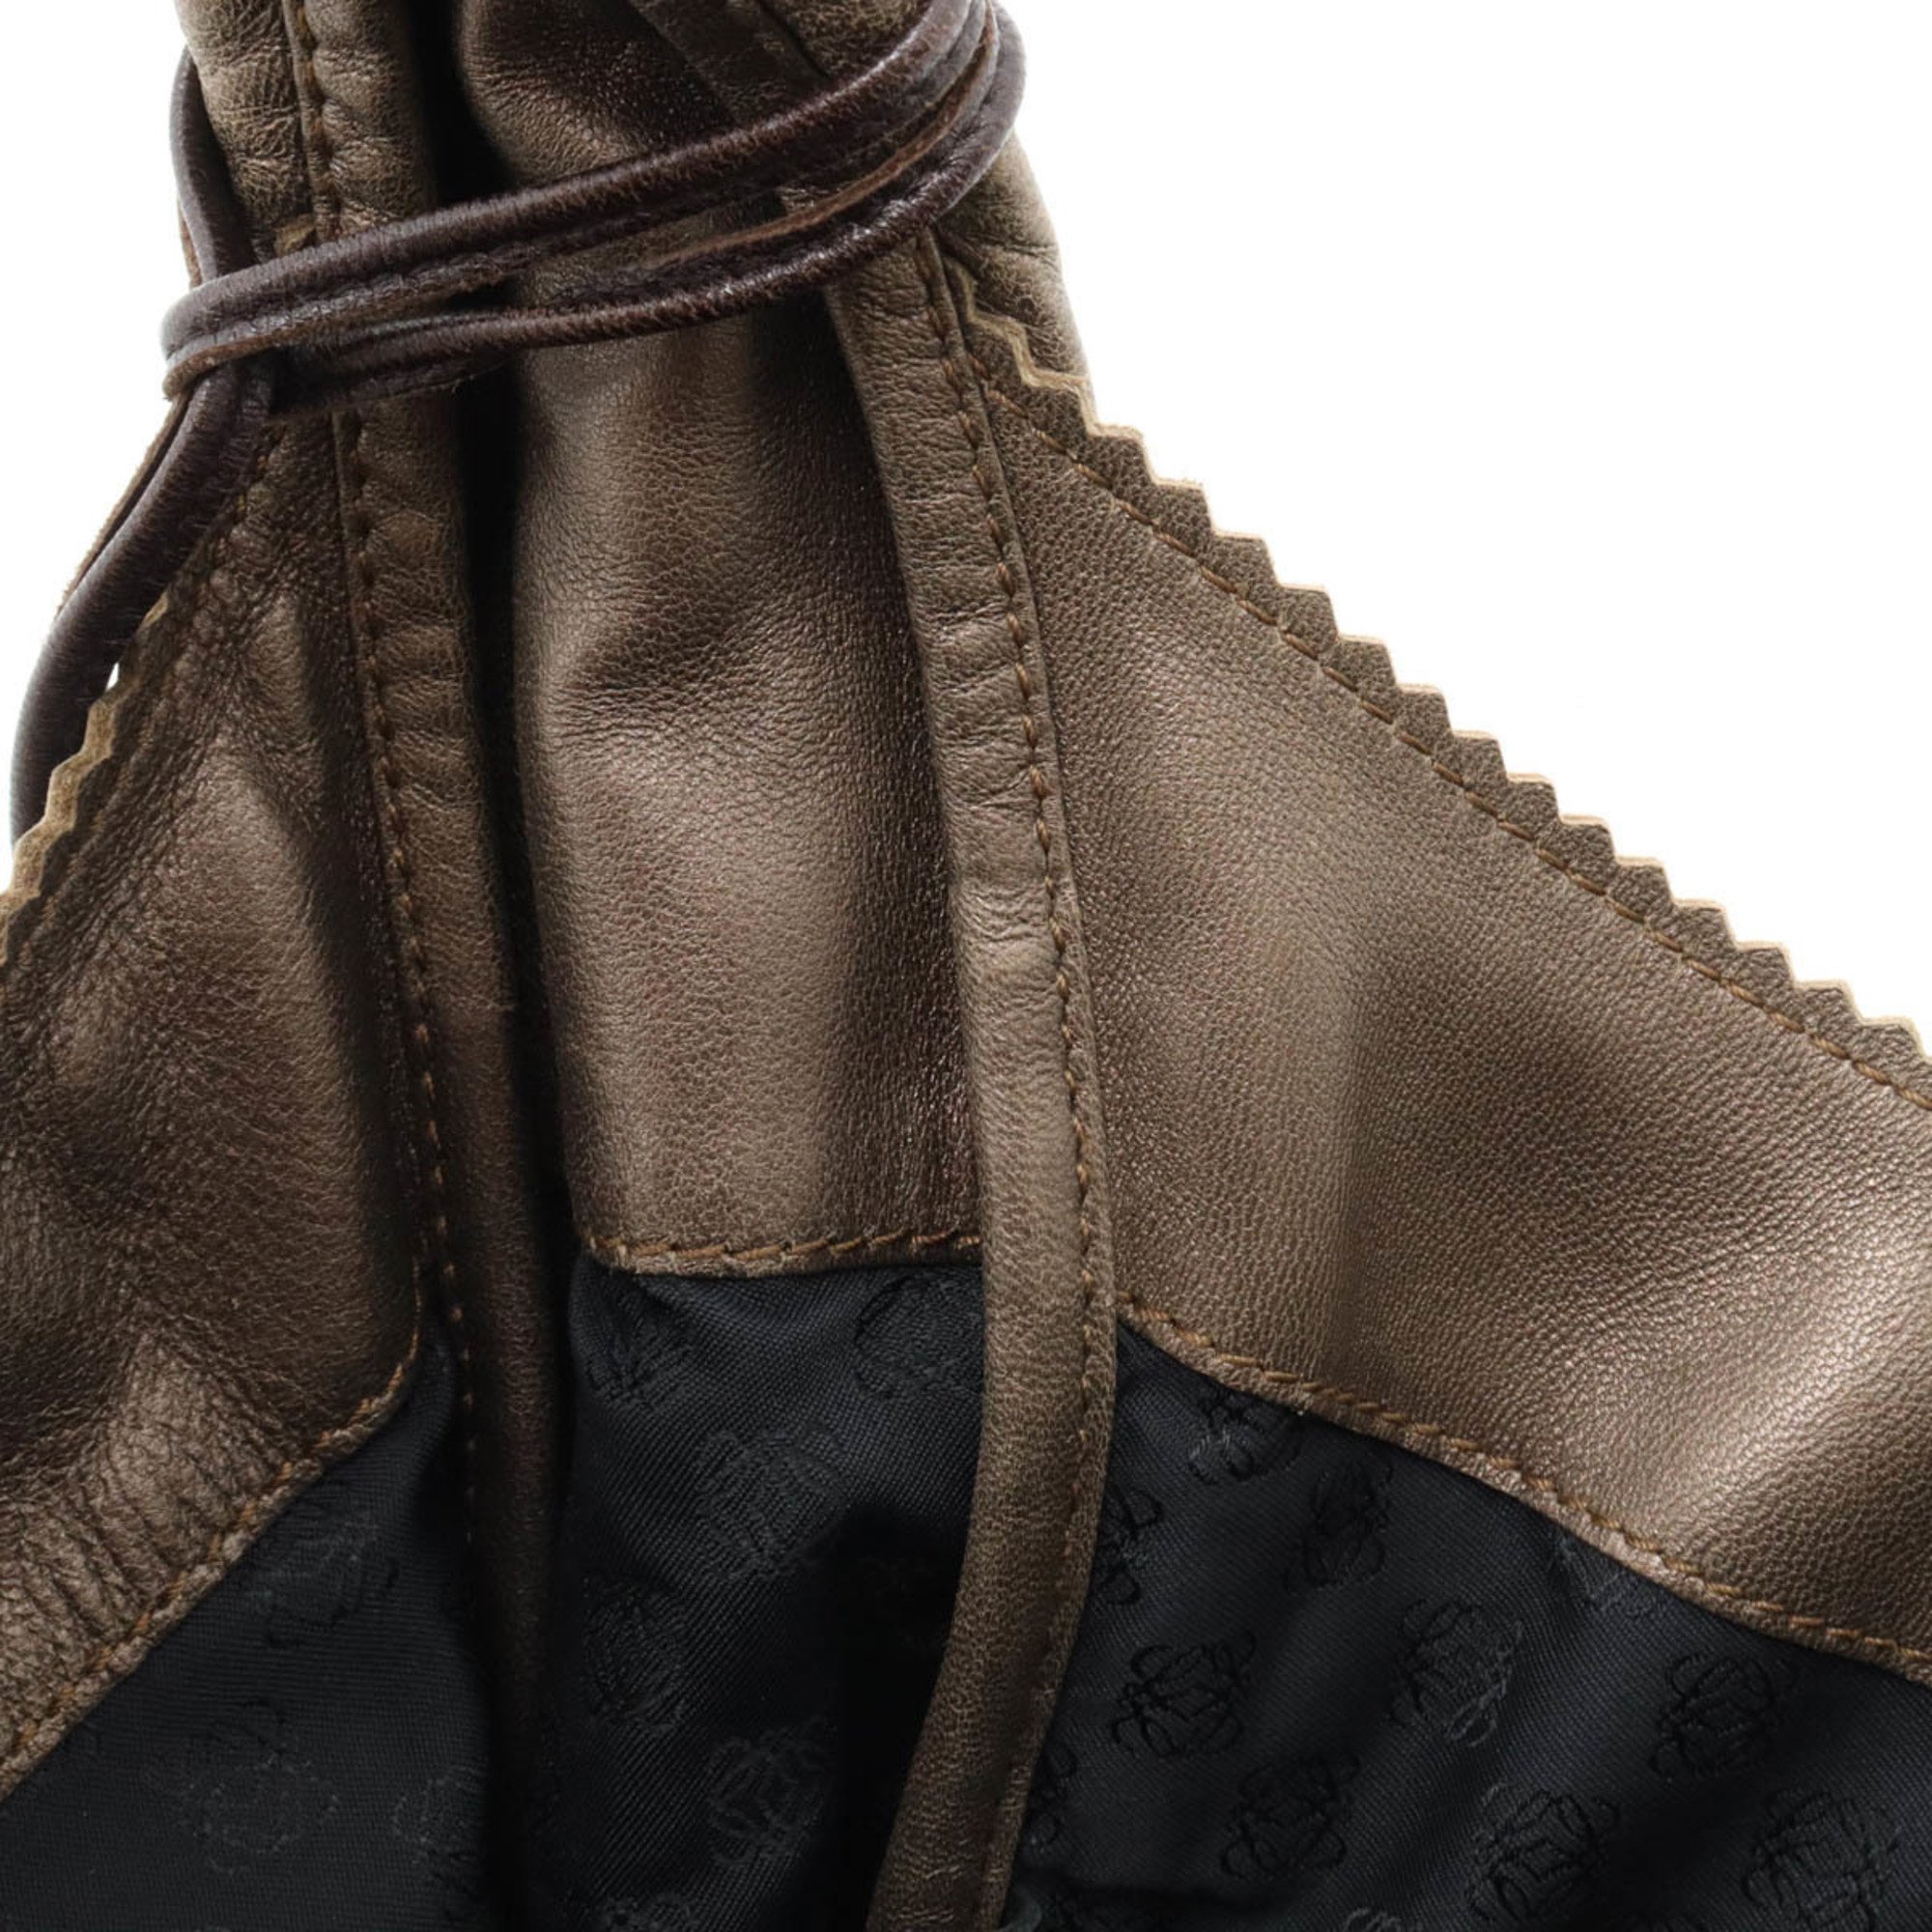 LOEWE Viento 30 Anagram Shoulder Bag Charm Nappa Leather Bronze Metallic